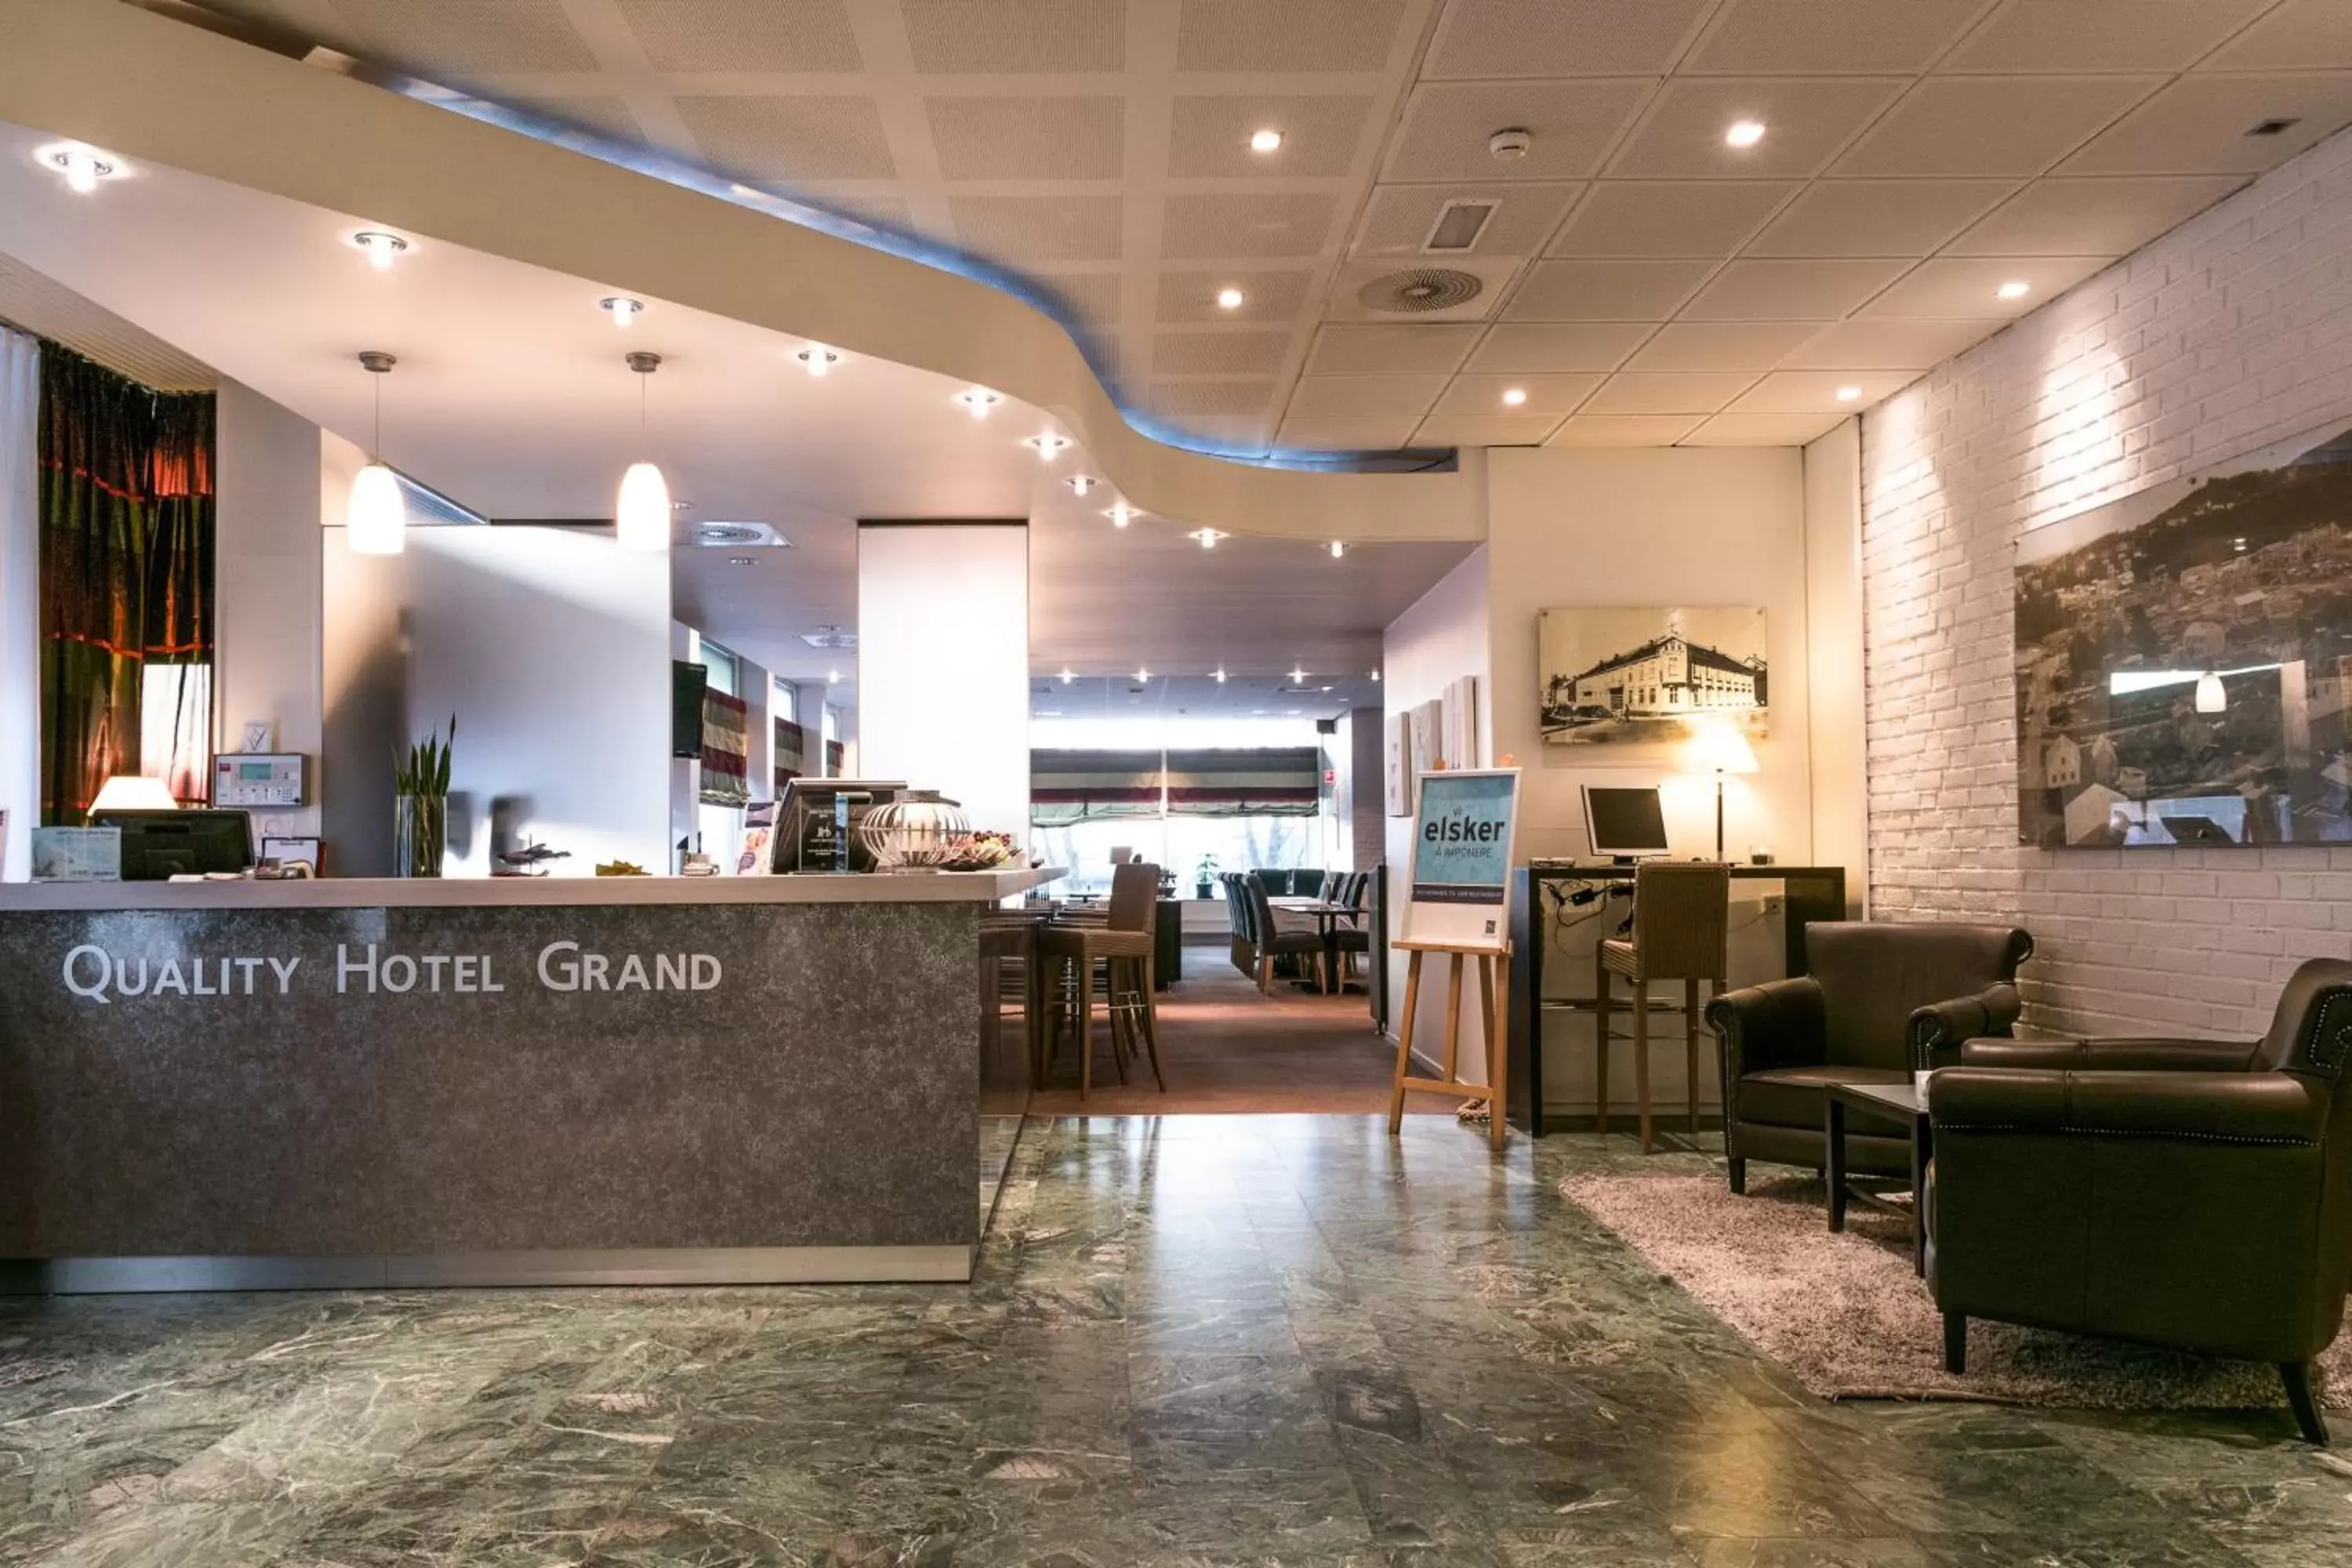 Lobby or reception, Lobby/Reception in Quality Hotel Grand Steinkjer